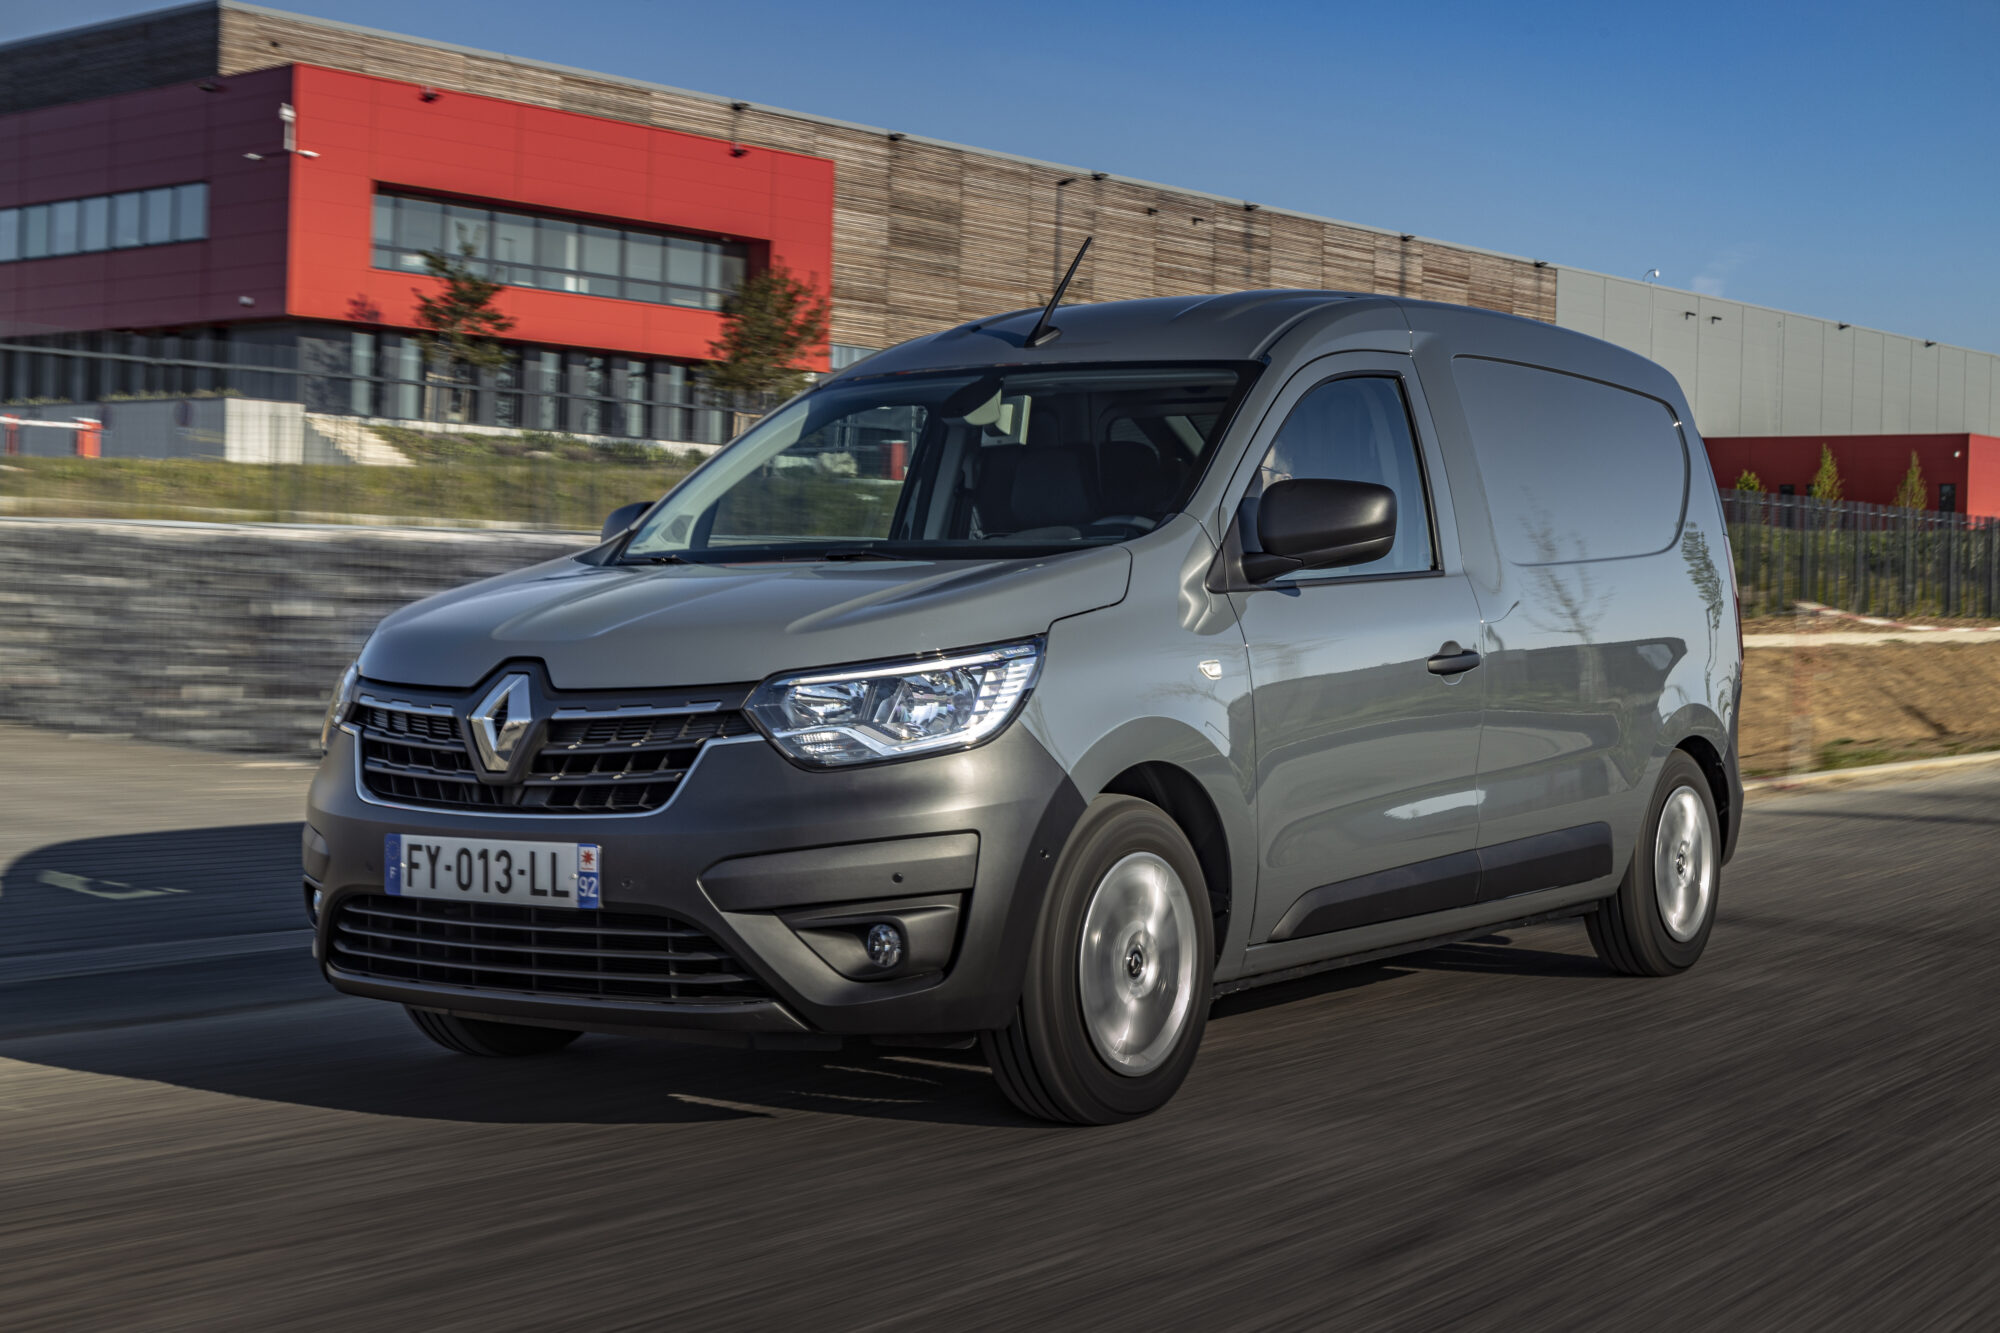 2021 - New Renault Express Van - Tests drive